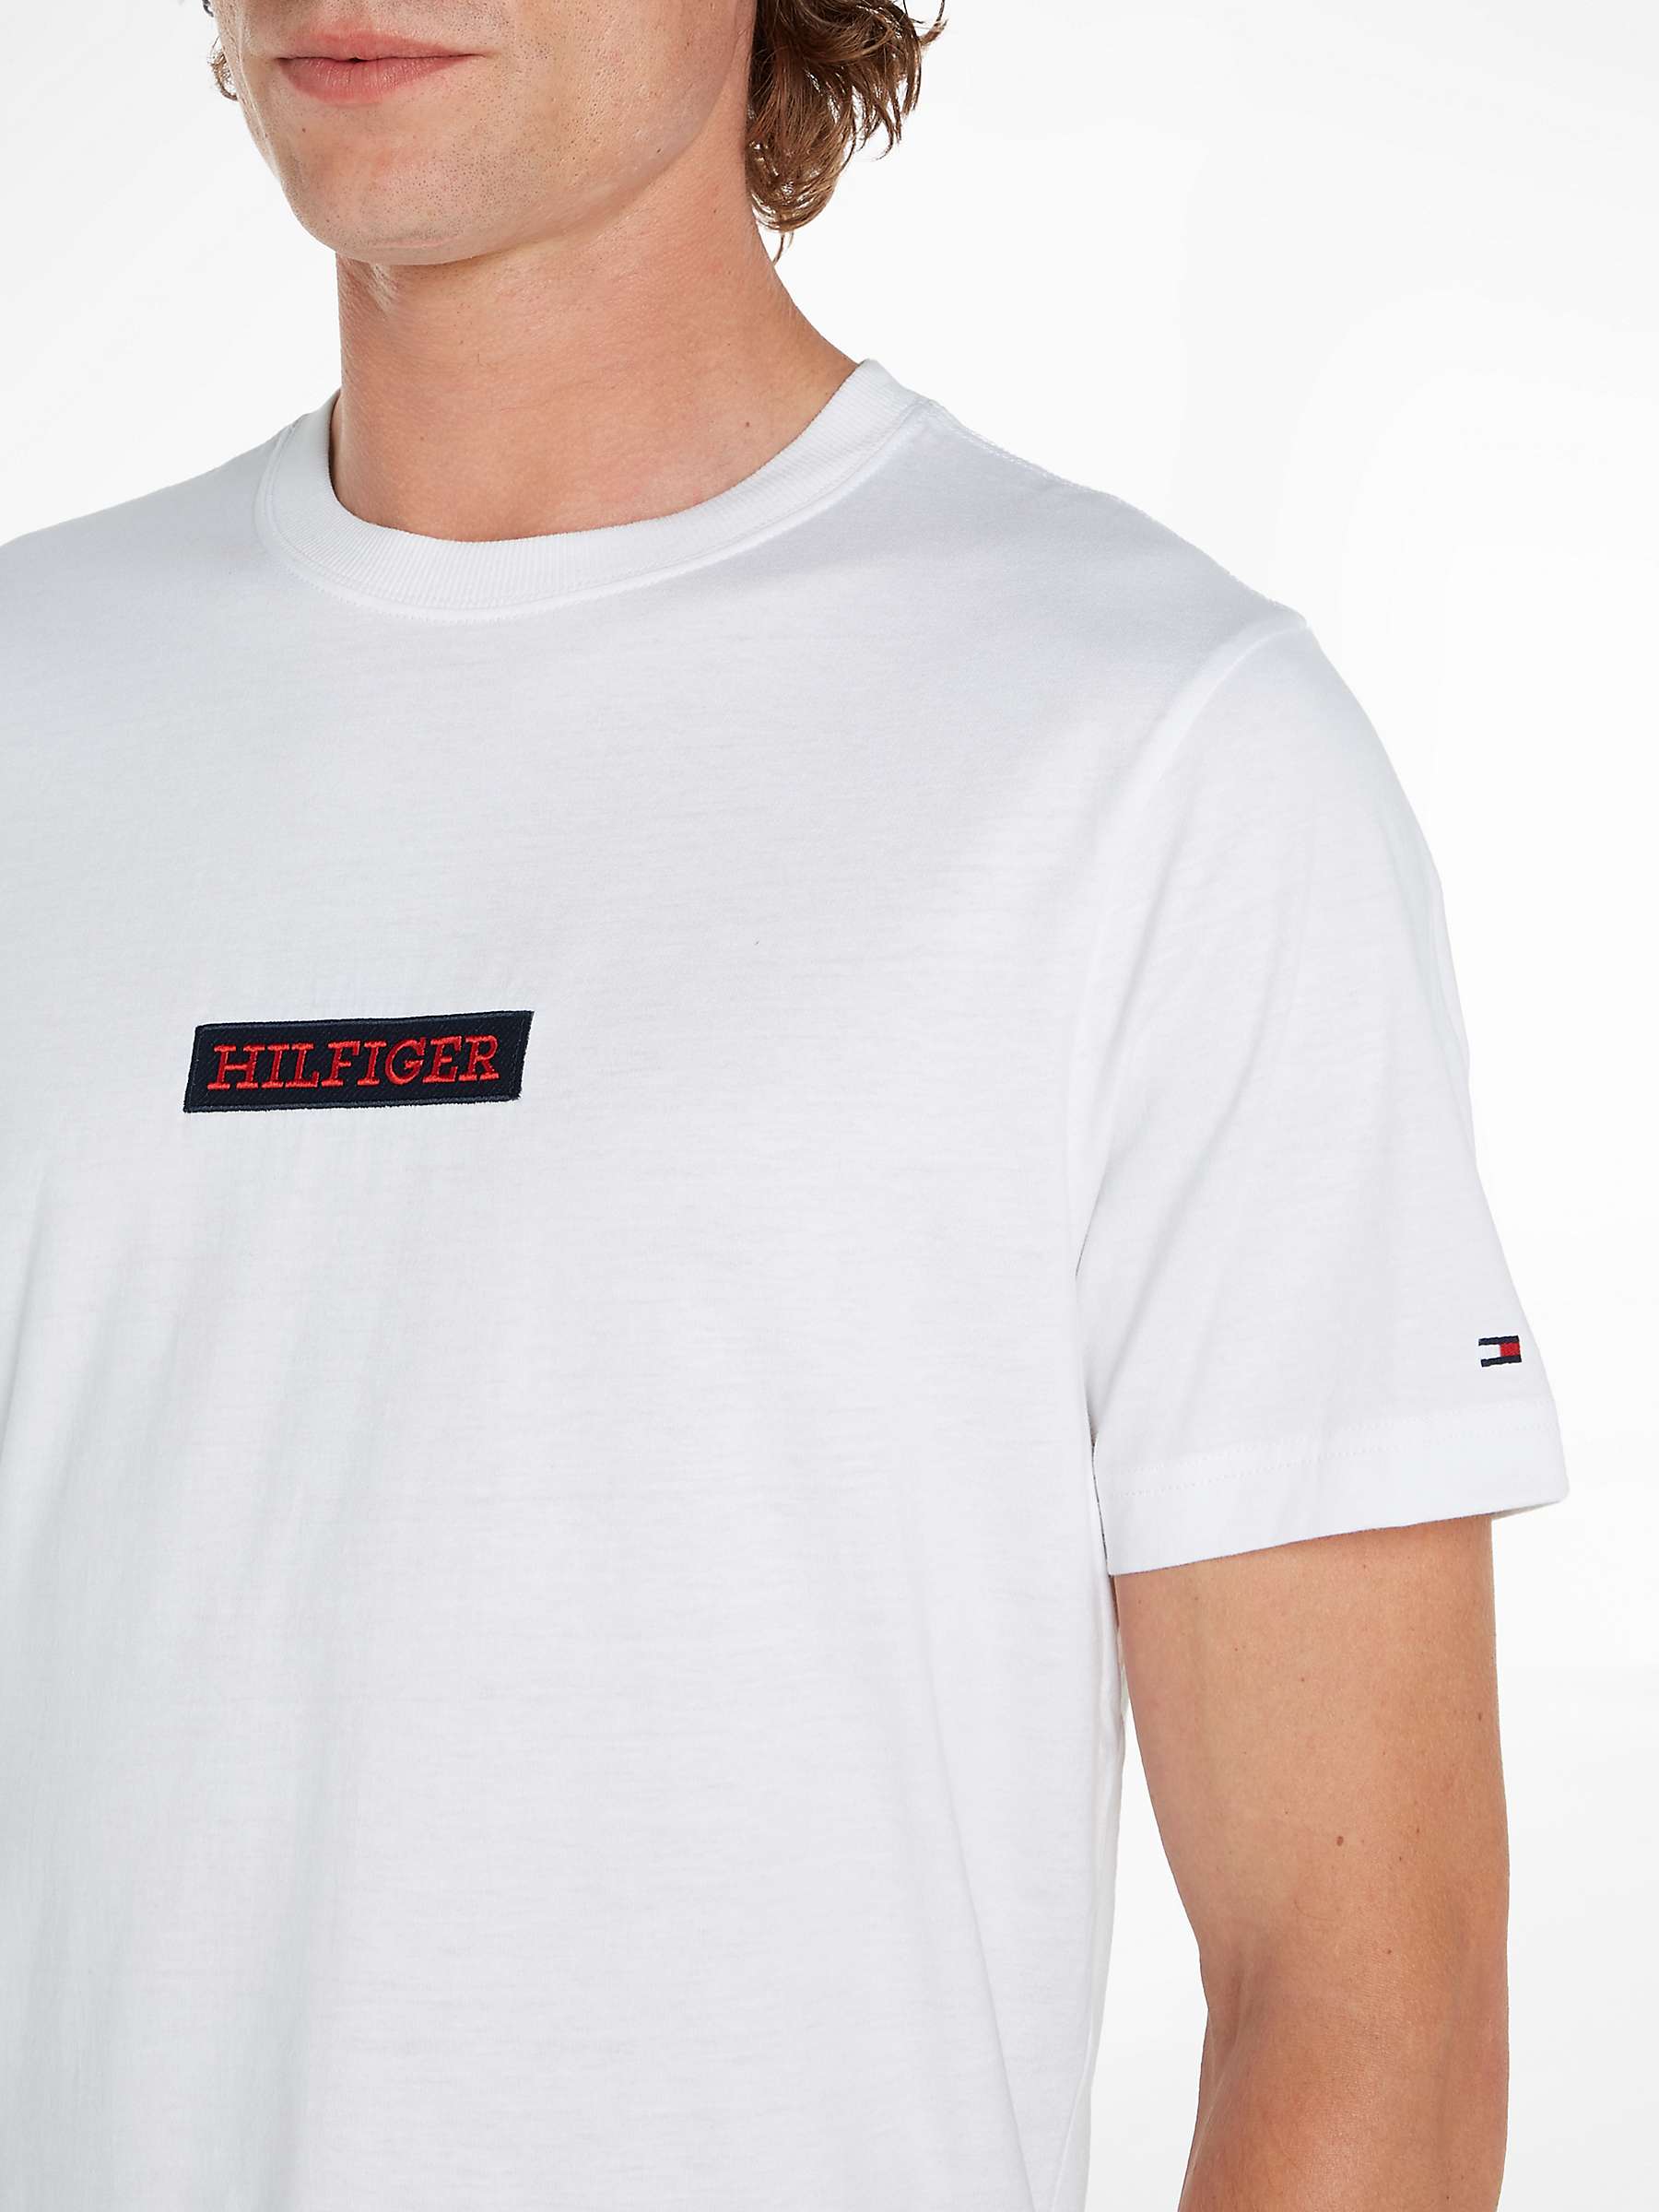 Buy Tommy Hilfiger Box Logo T-Shirt Online at johnlewis.com